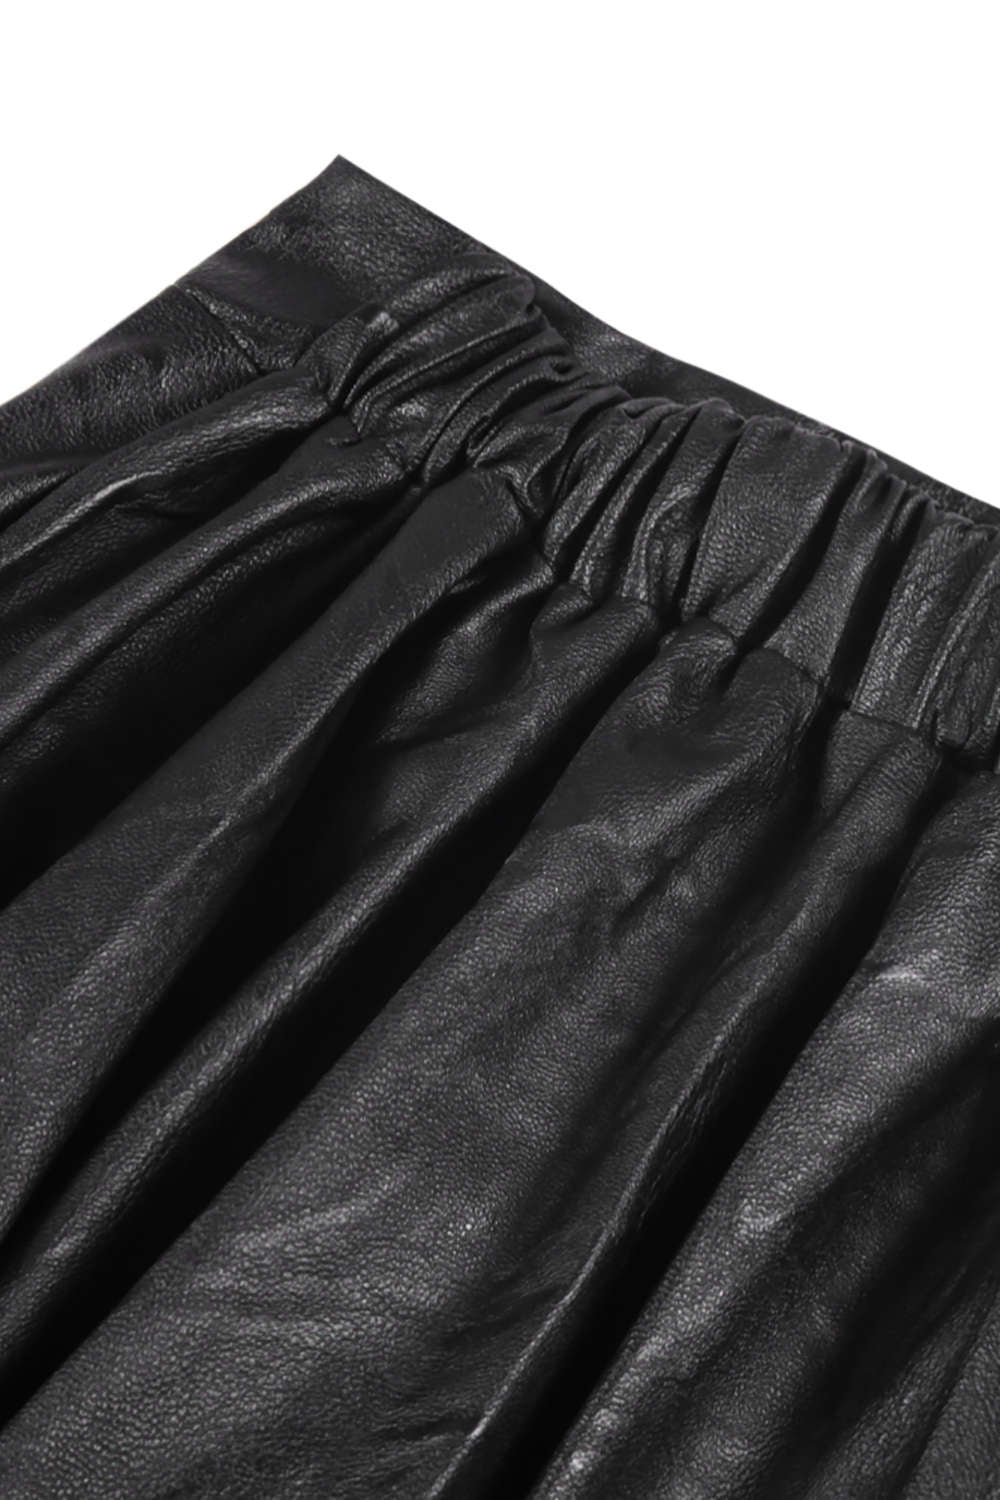 Iyasson Women Winter Faux Leather High Waist Pleated Skirt